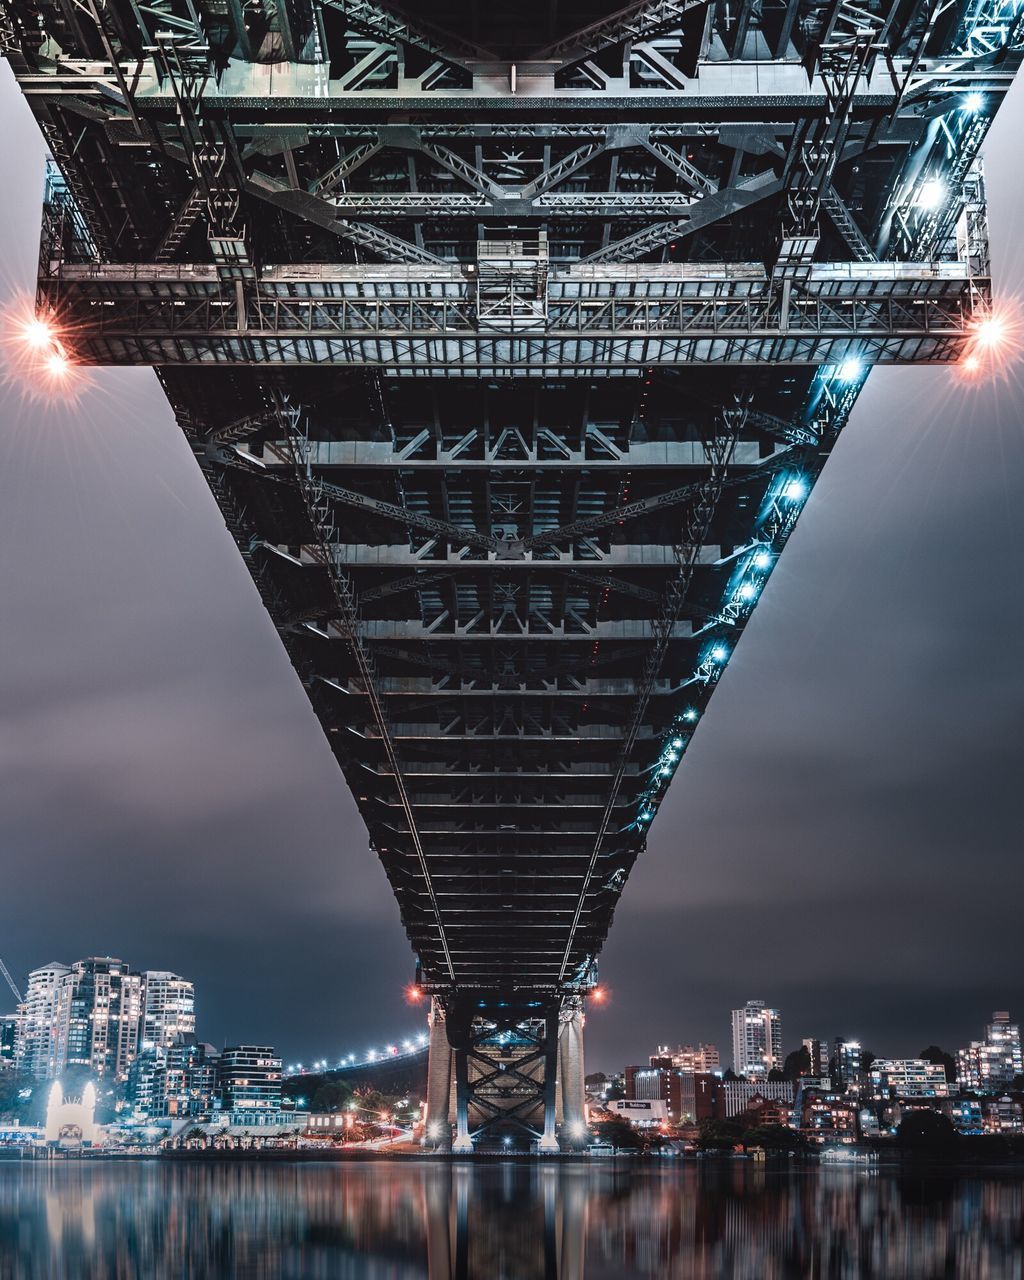 Underneath view of bridge in illuminated city at night